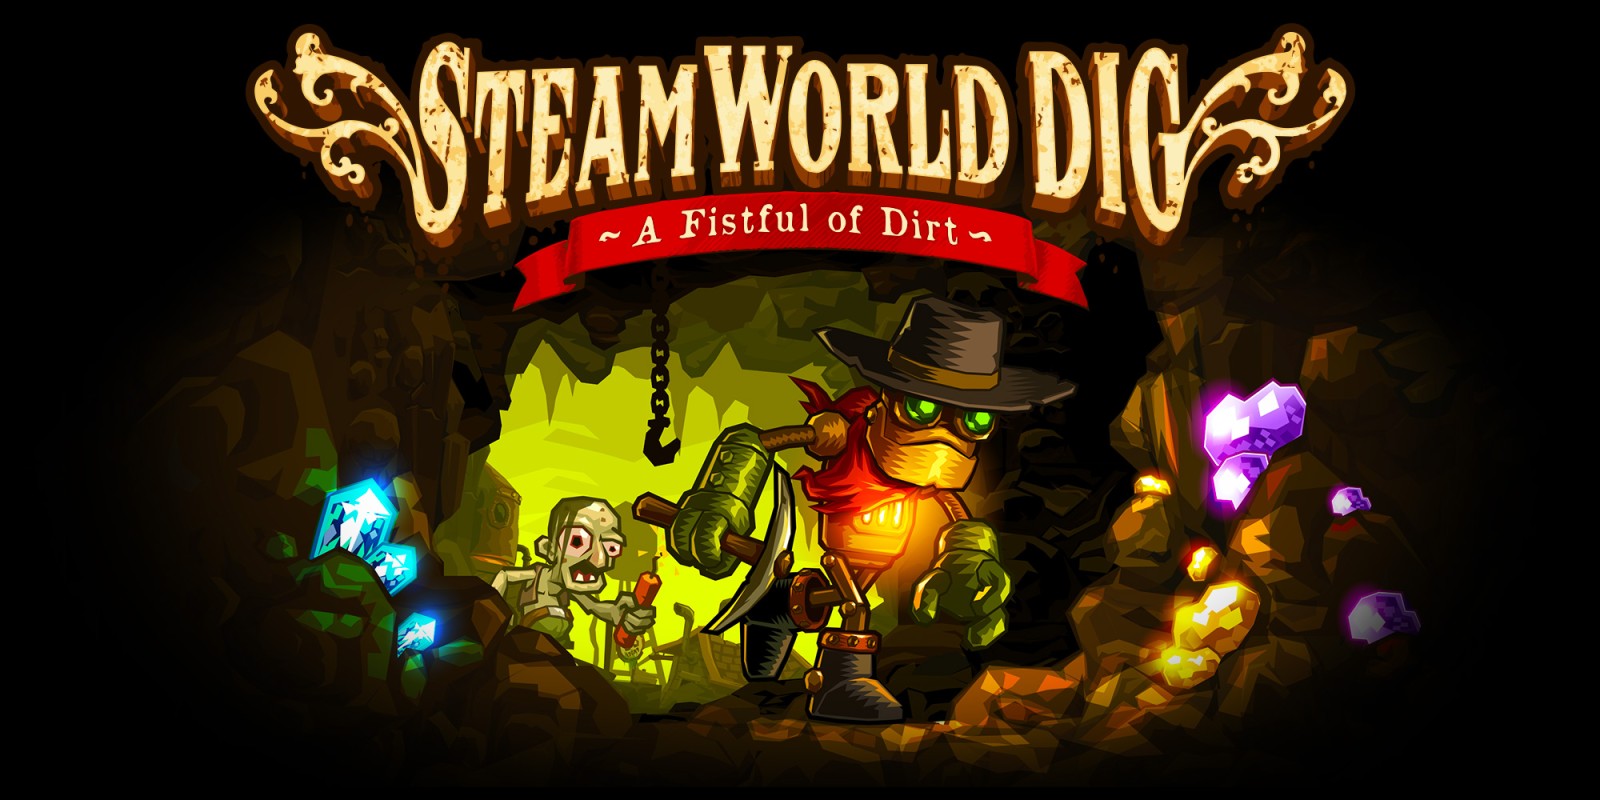 steamworld dig.jpg